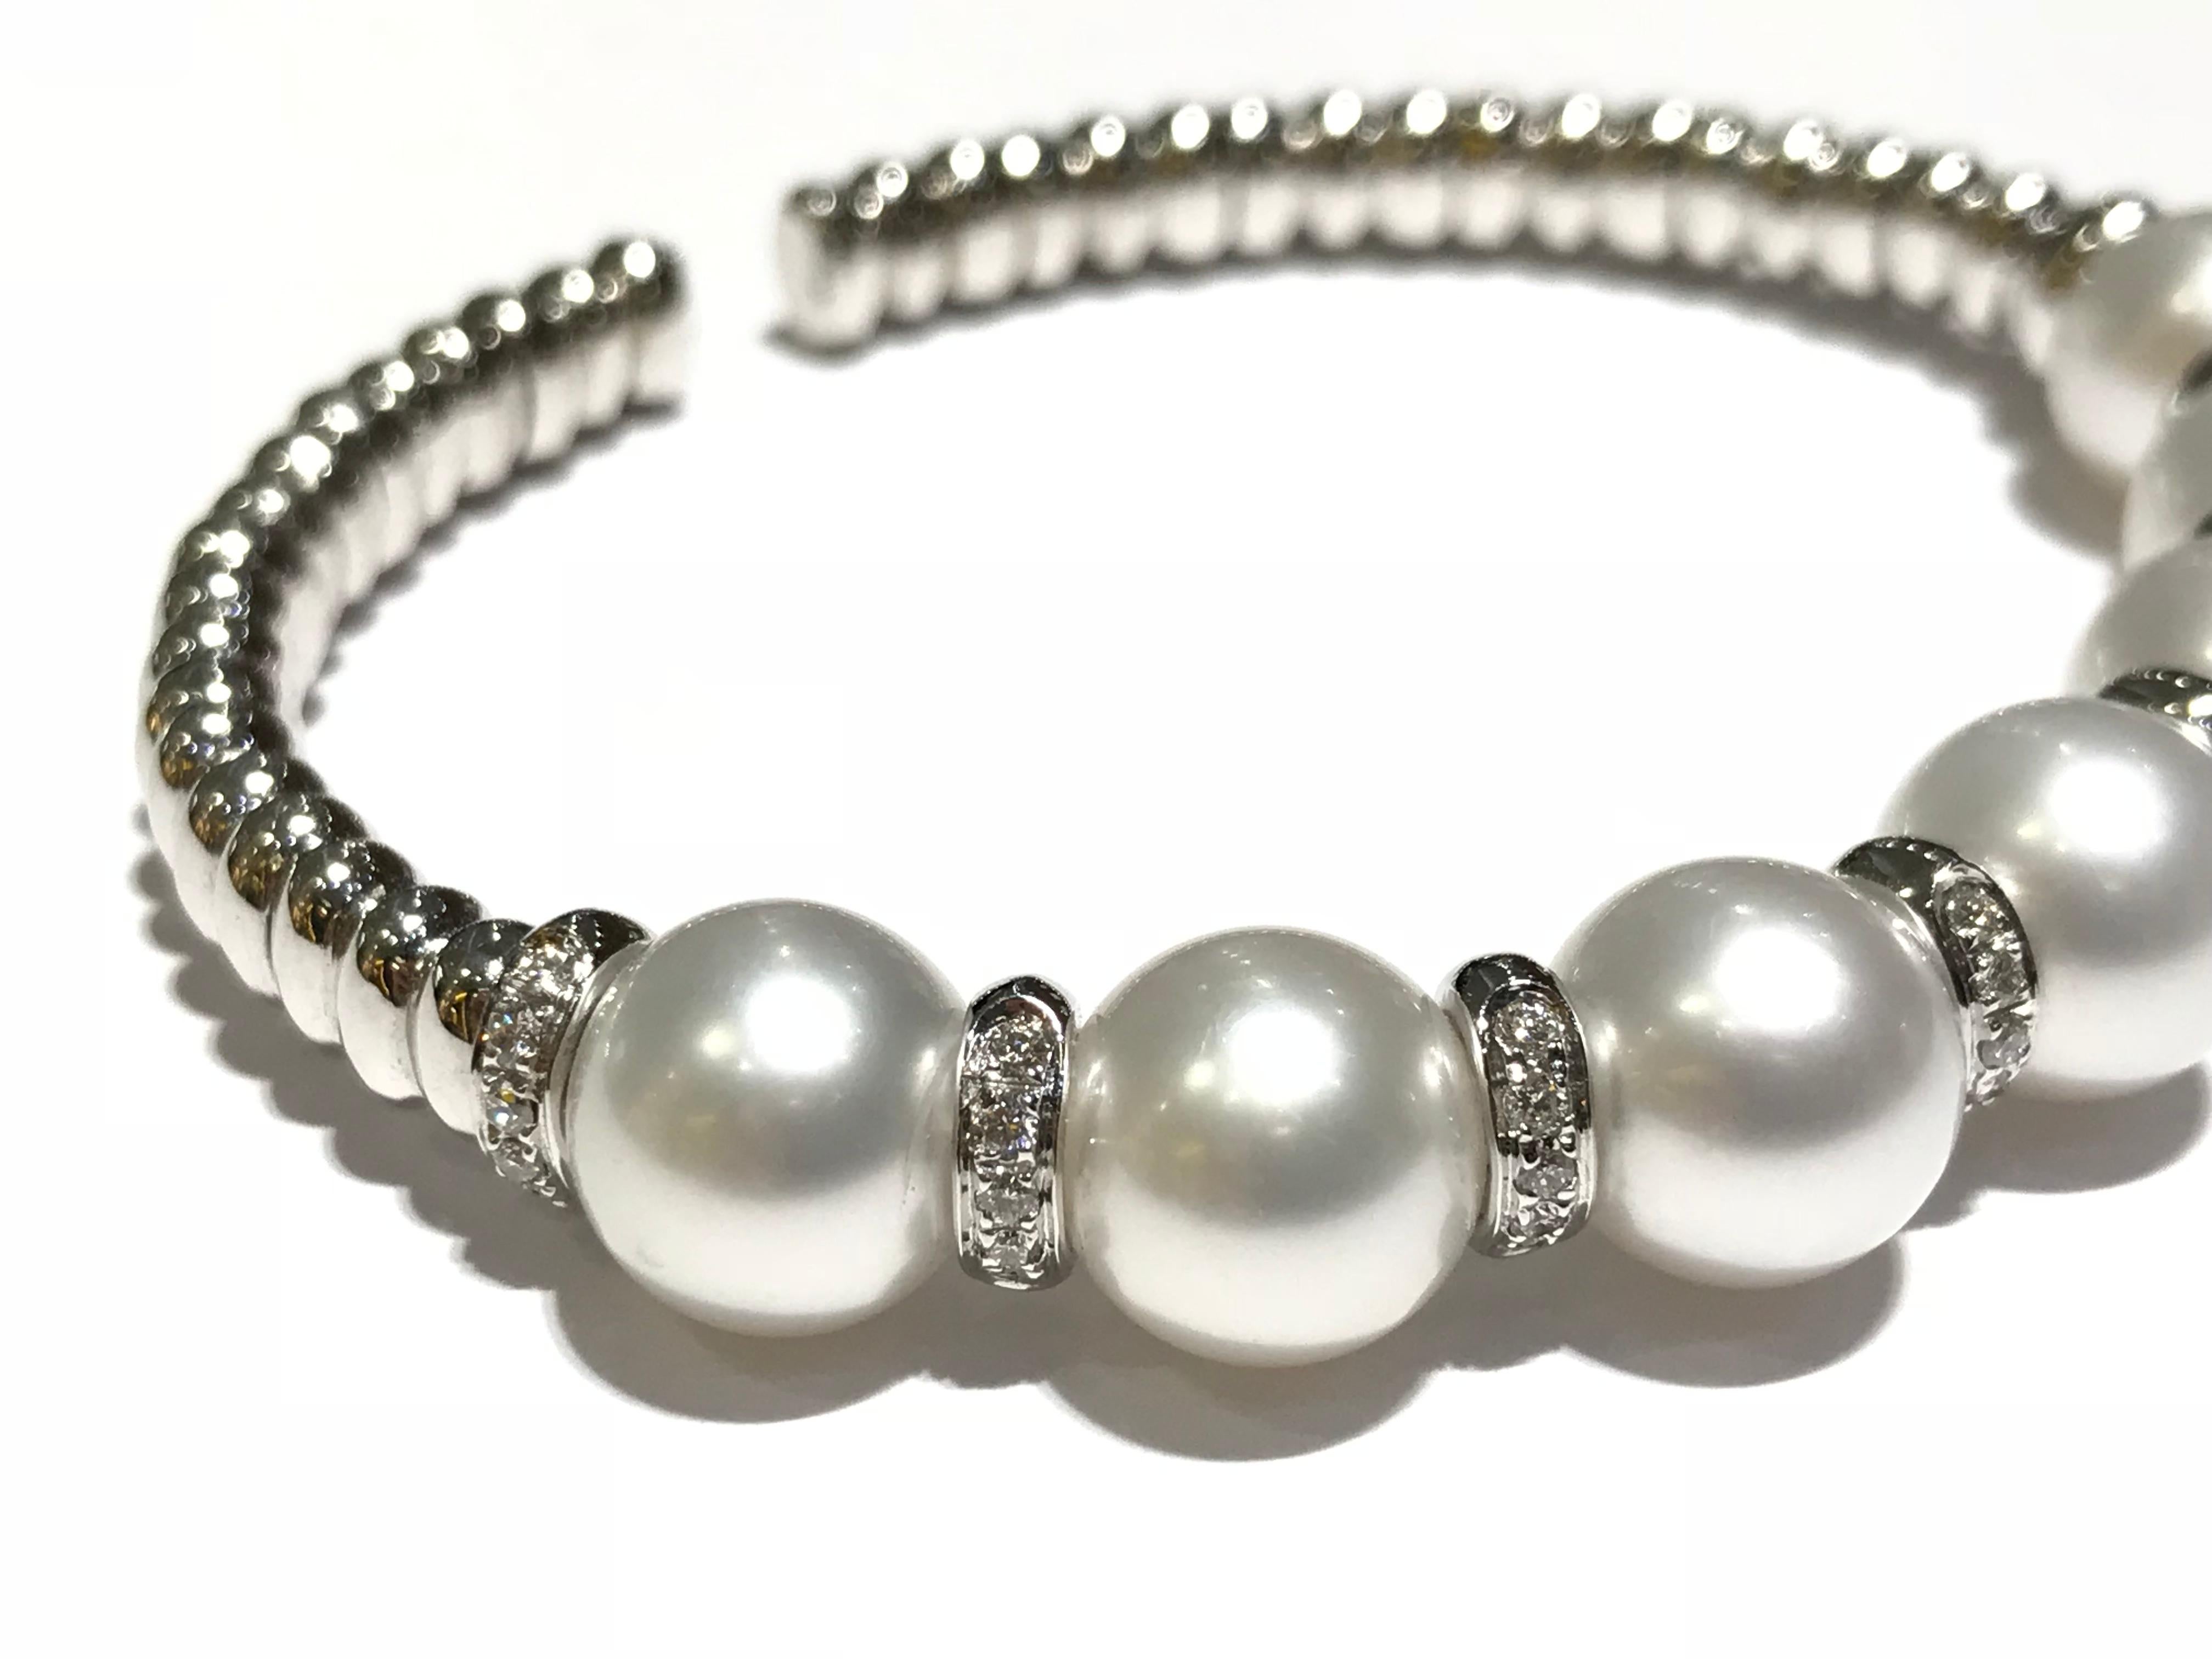 CRIVELLI 18 karat white gold bangle with pearls and diamonds 
0.37 ct diamond 
VS clarity F colour 
7 pearls in grey blue tone 